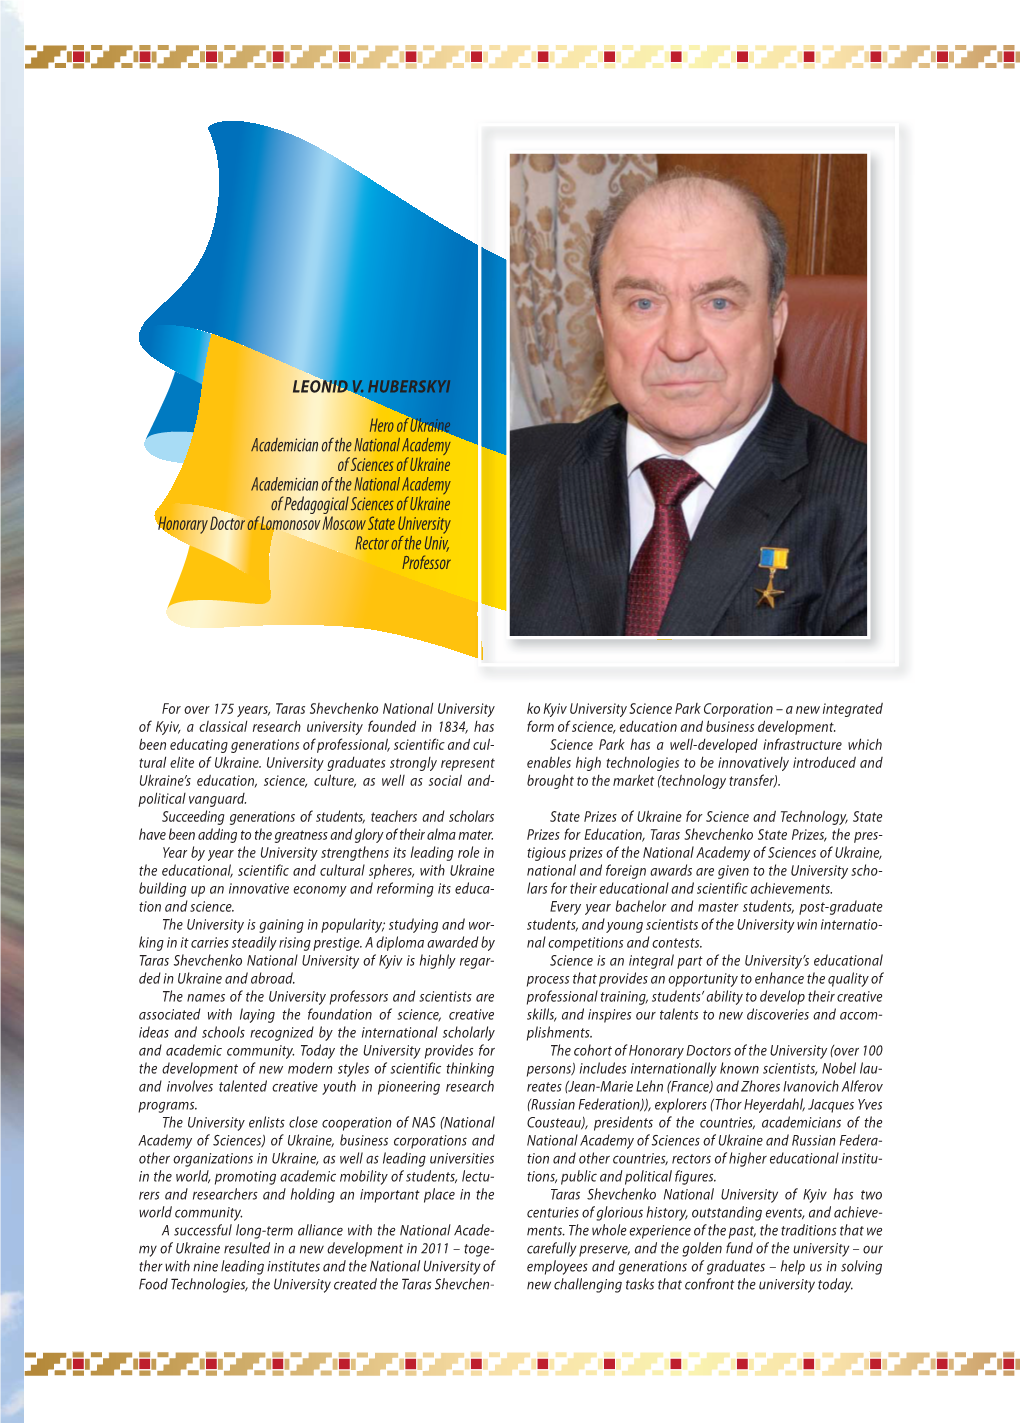 Hero of Ukraine Academician of the National Academy of Sciences Of